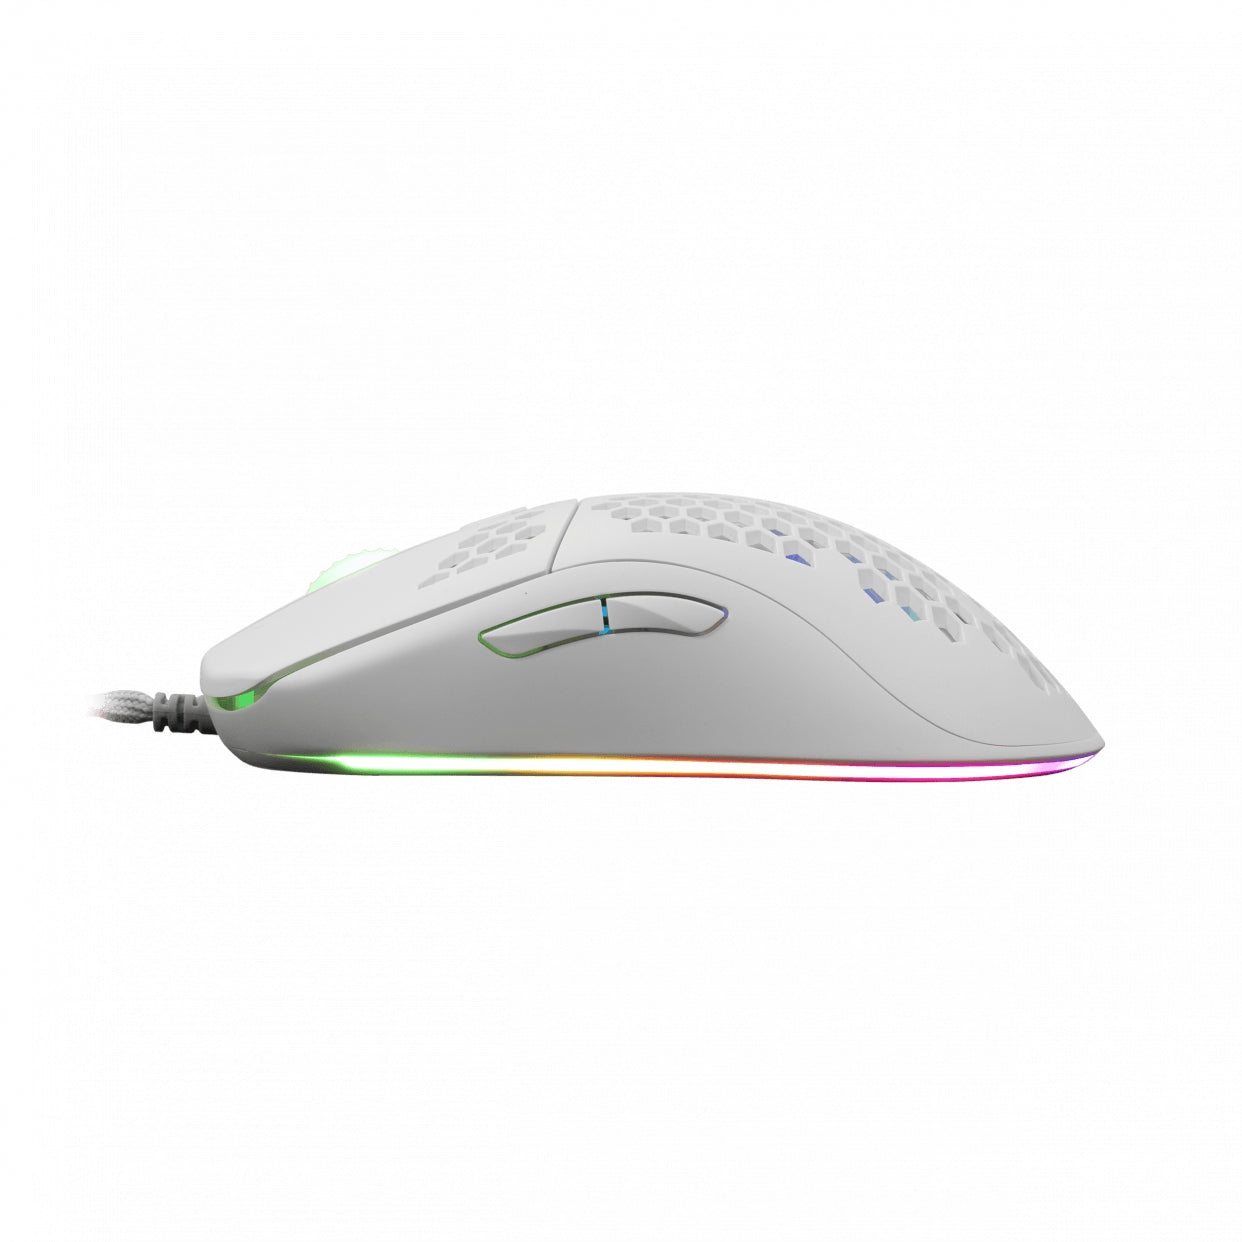 Gaming optical computer mouse with RGB lighting, White Shark GM-5007 Galahad-W White, 6400 DPI